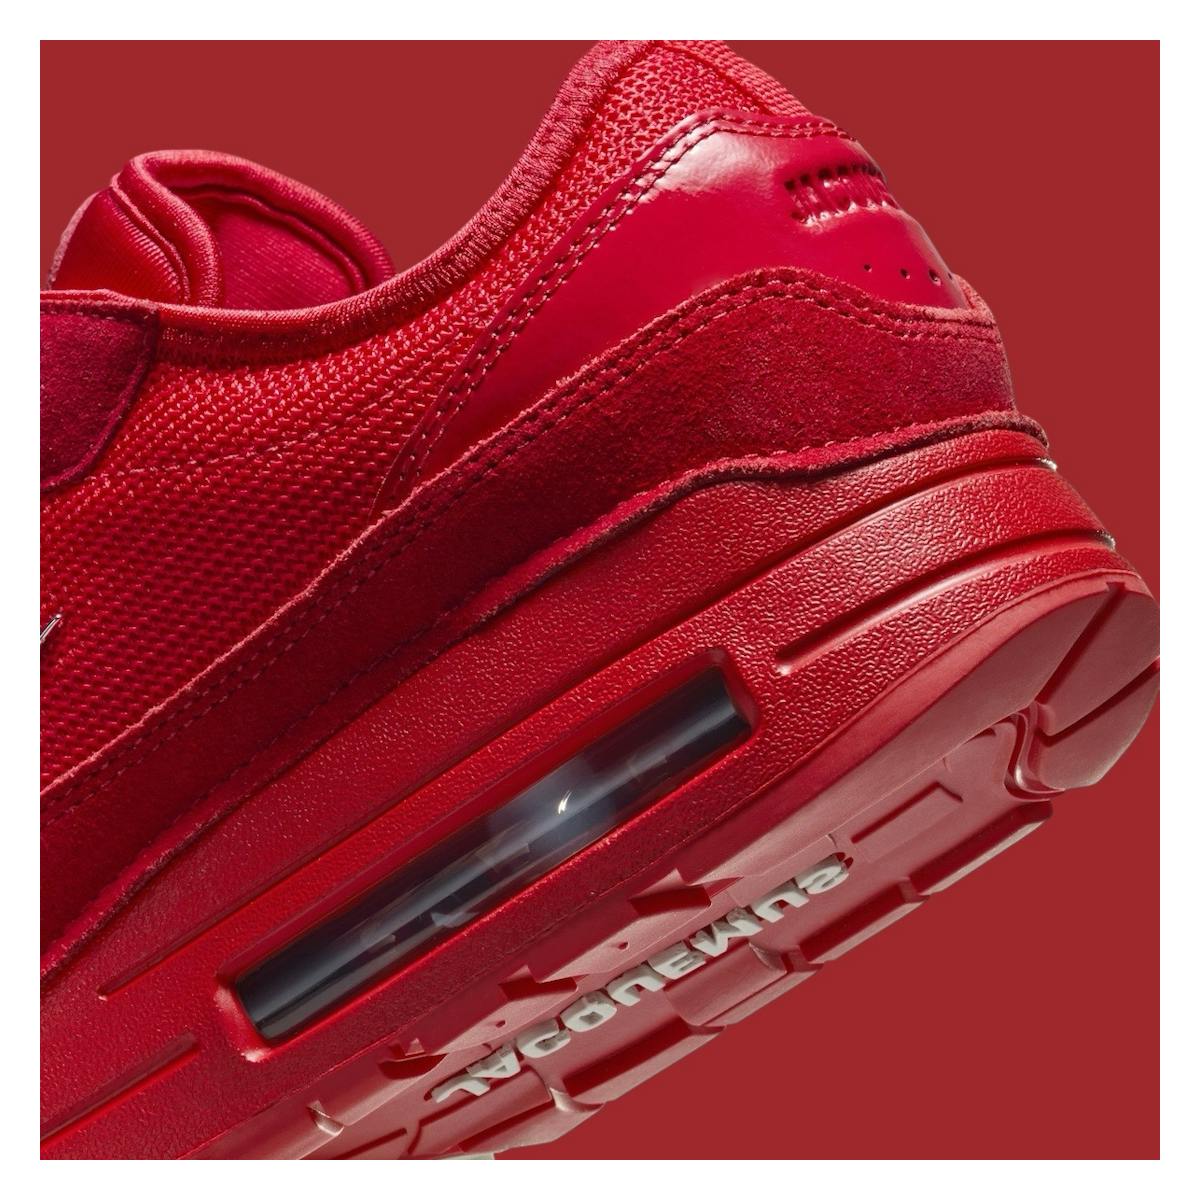 Jacquemus x Nike Air Max 1 '86 "Mystic Red"